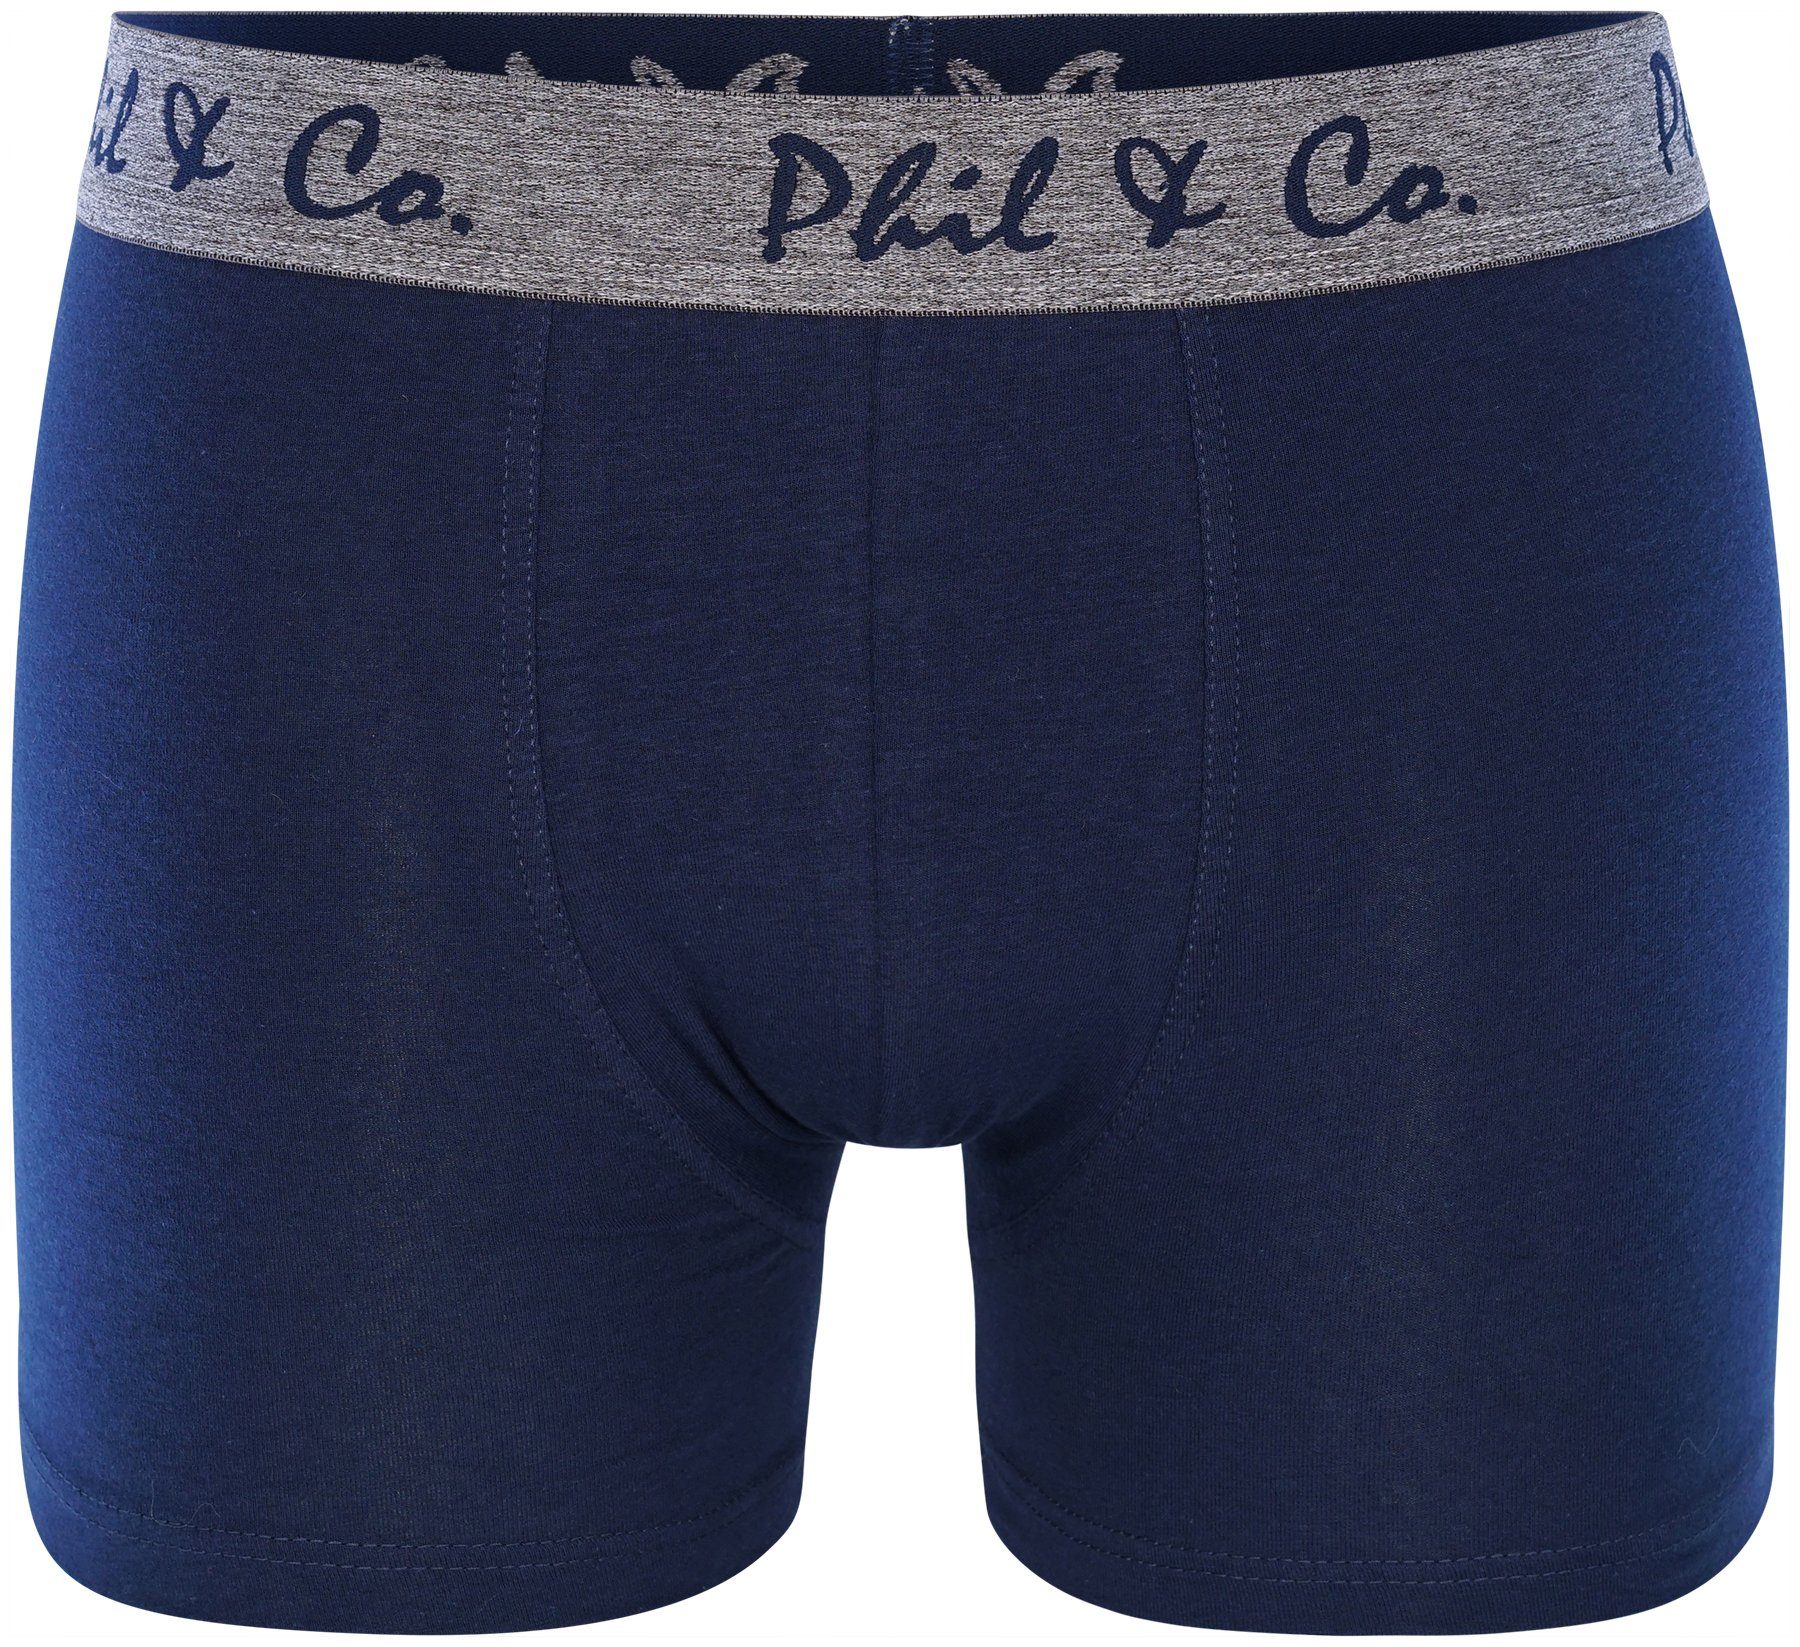 Retro Phil 2-Pack & Pants 'Jersey' Co. Retropants (Navy/Grau)